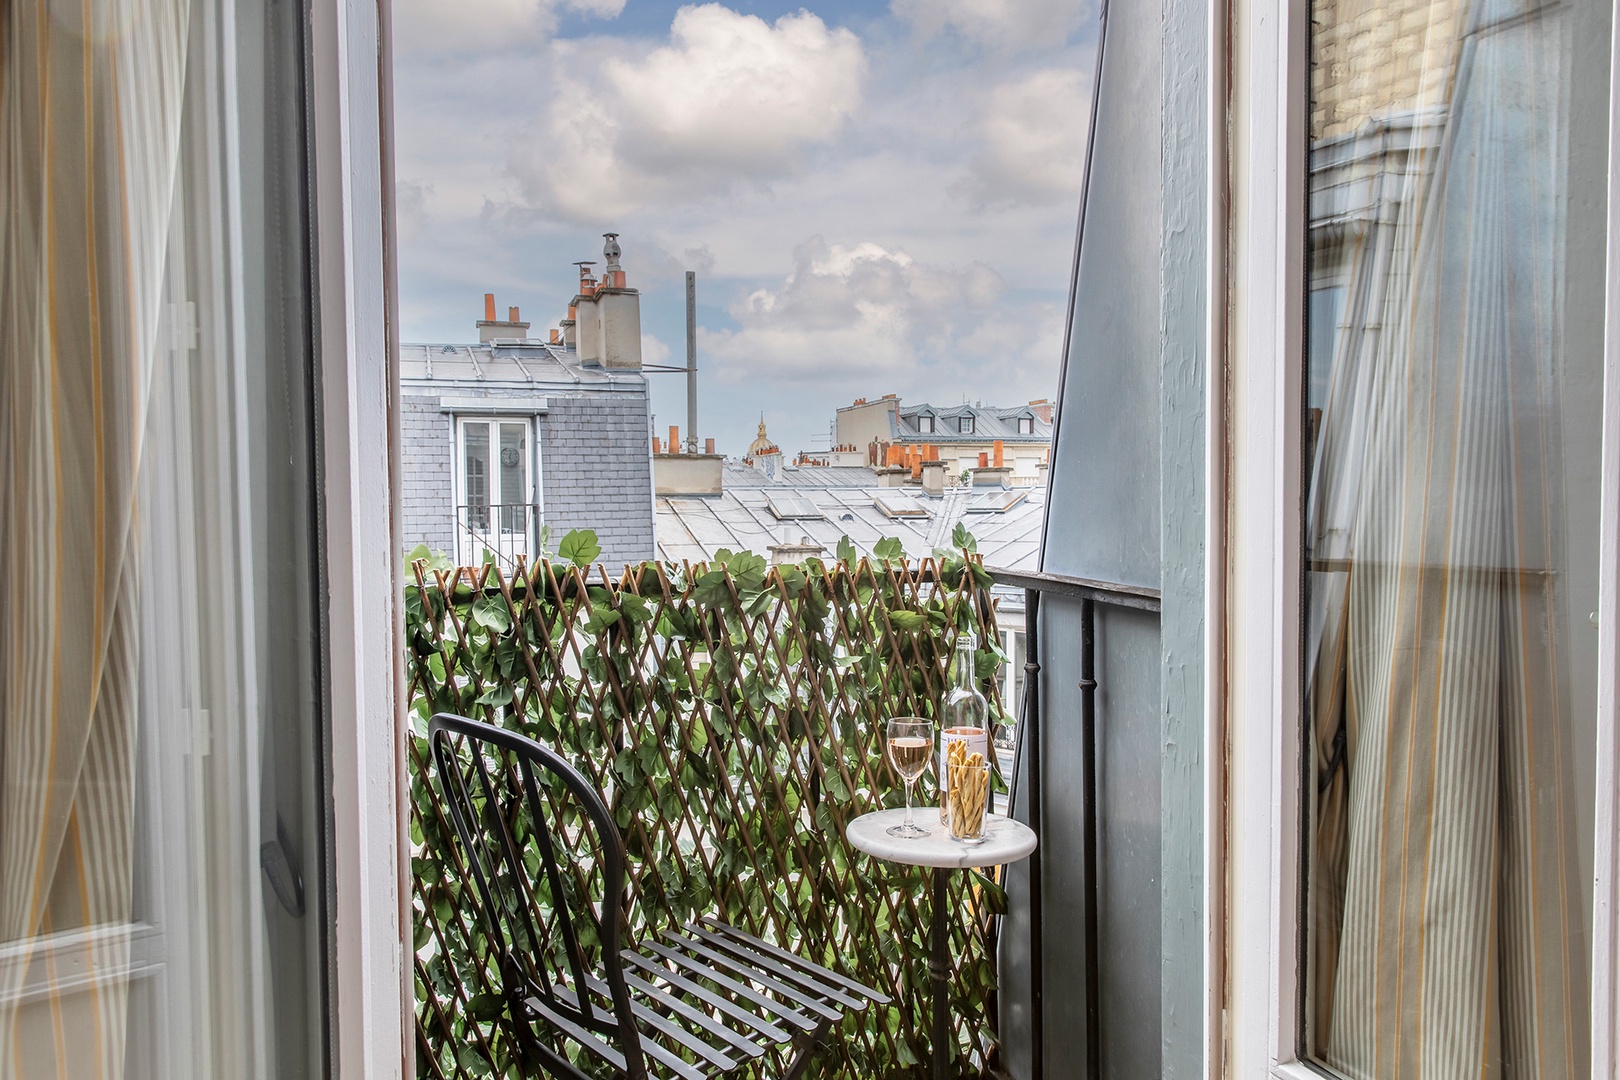 Classic Parisian views from the bedroom balcony will delight!